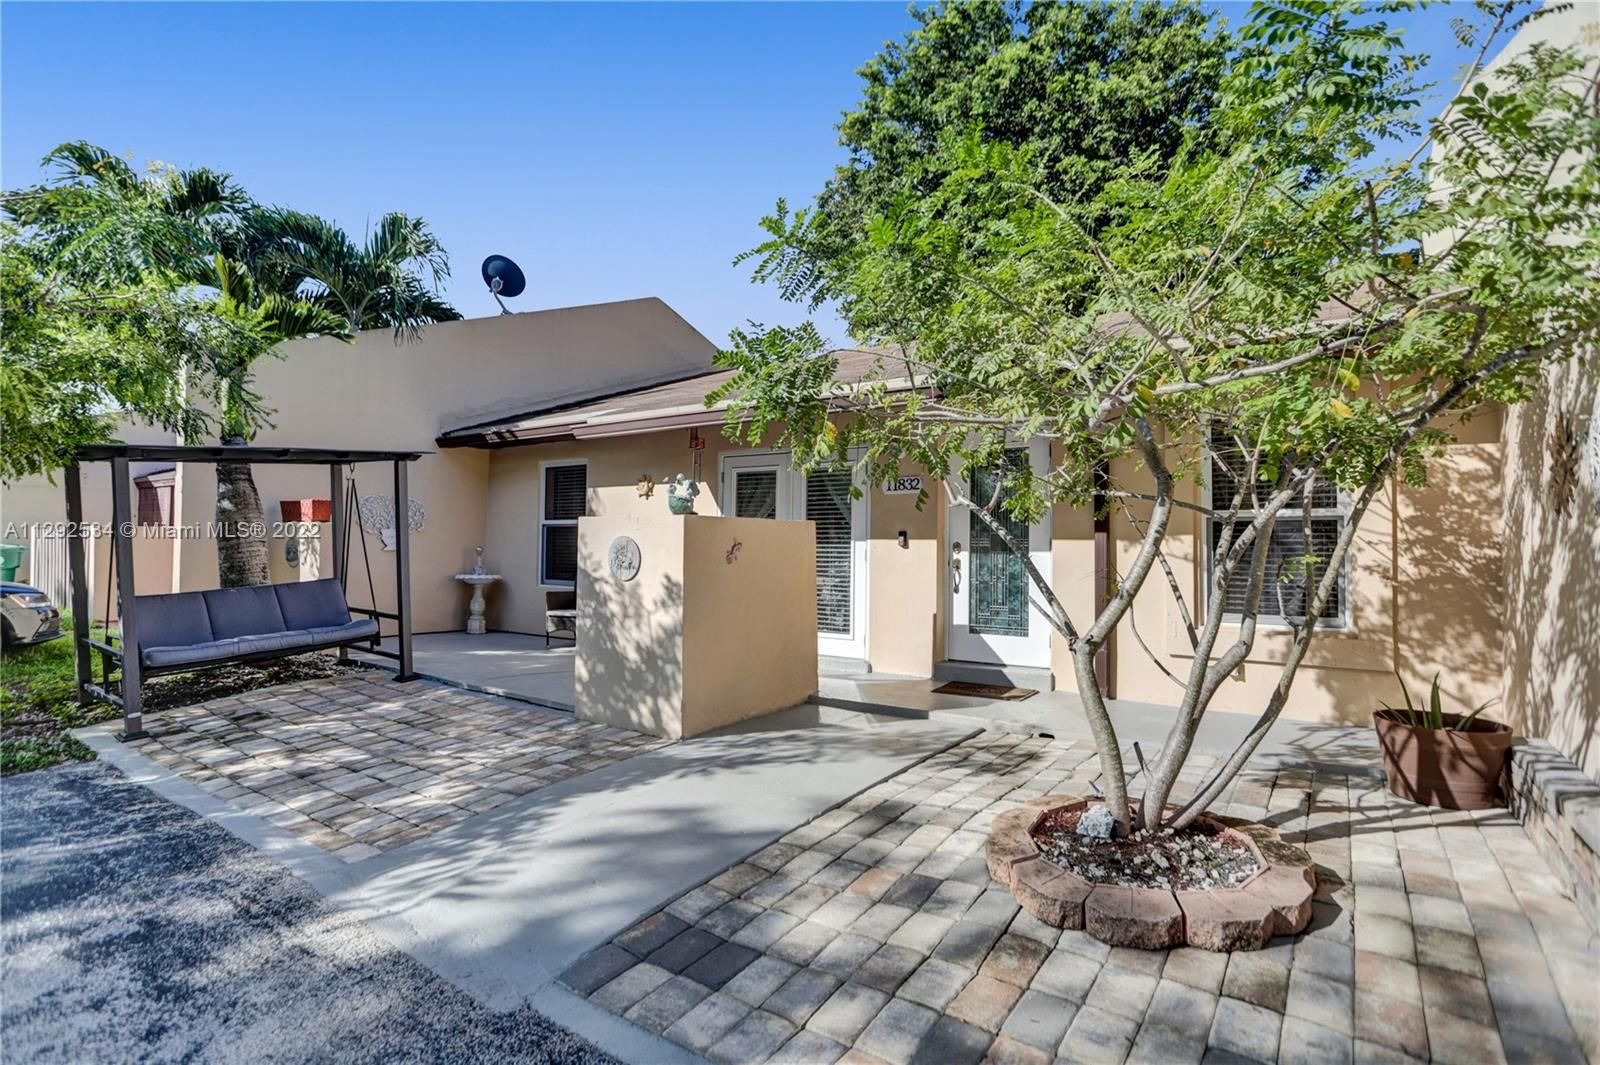 Real estate property located at 11832 125th Pl, Miami-Dade County, Miami, FL